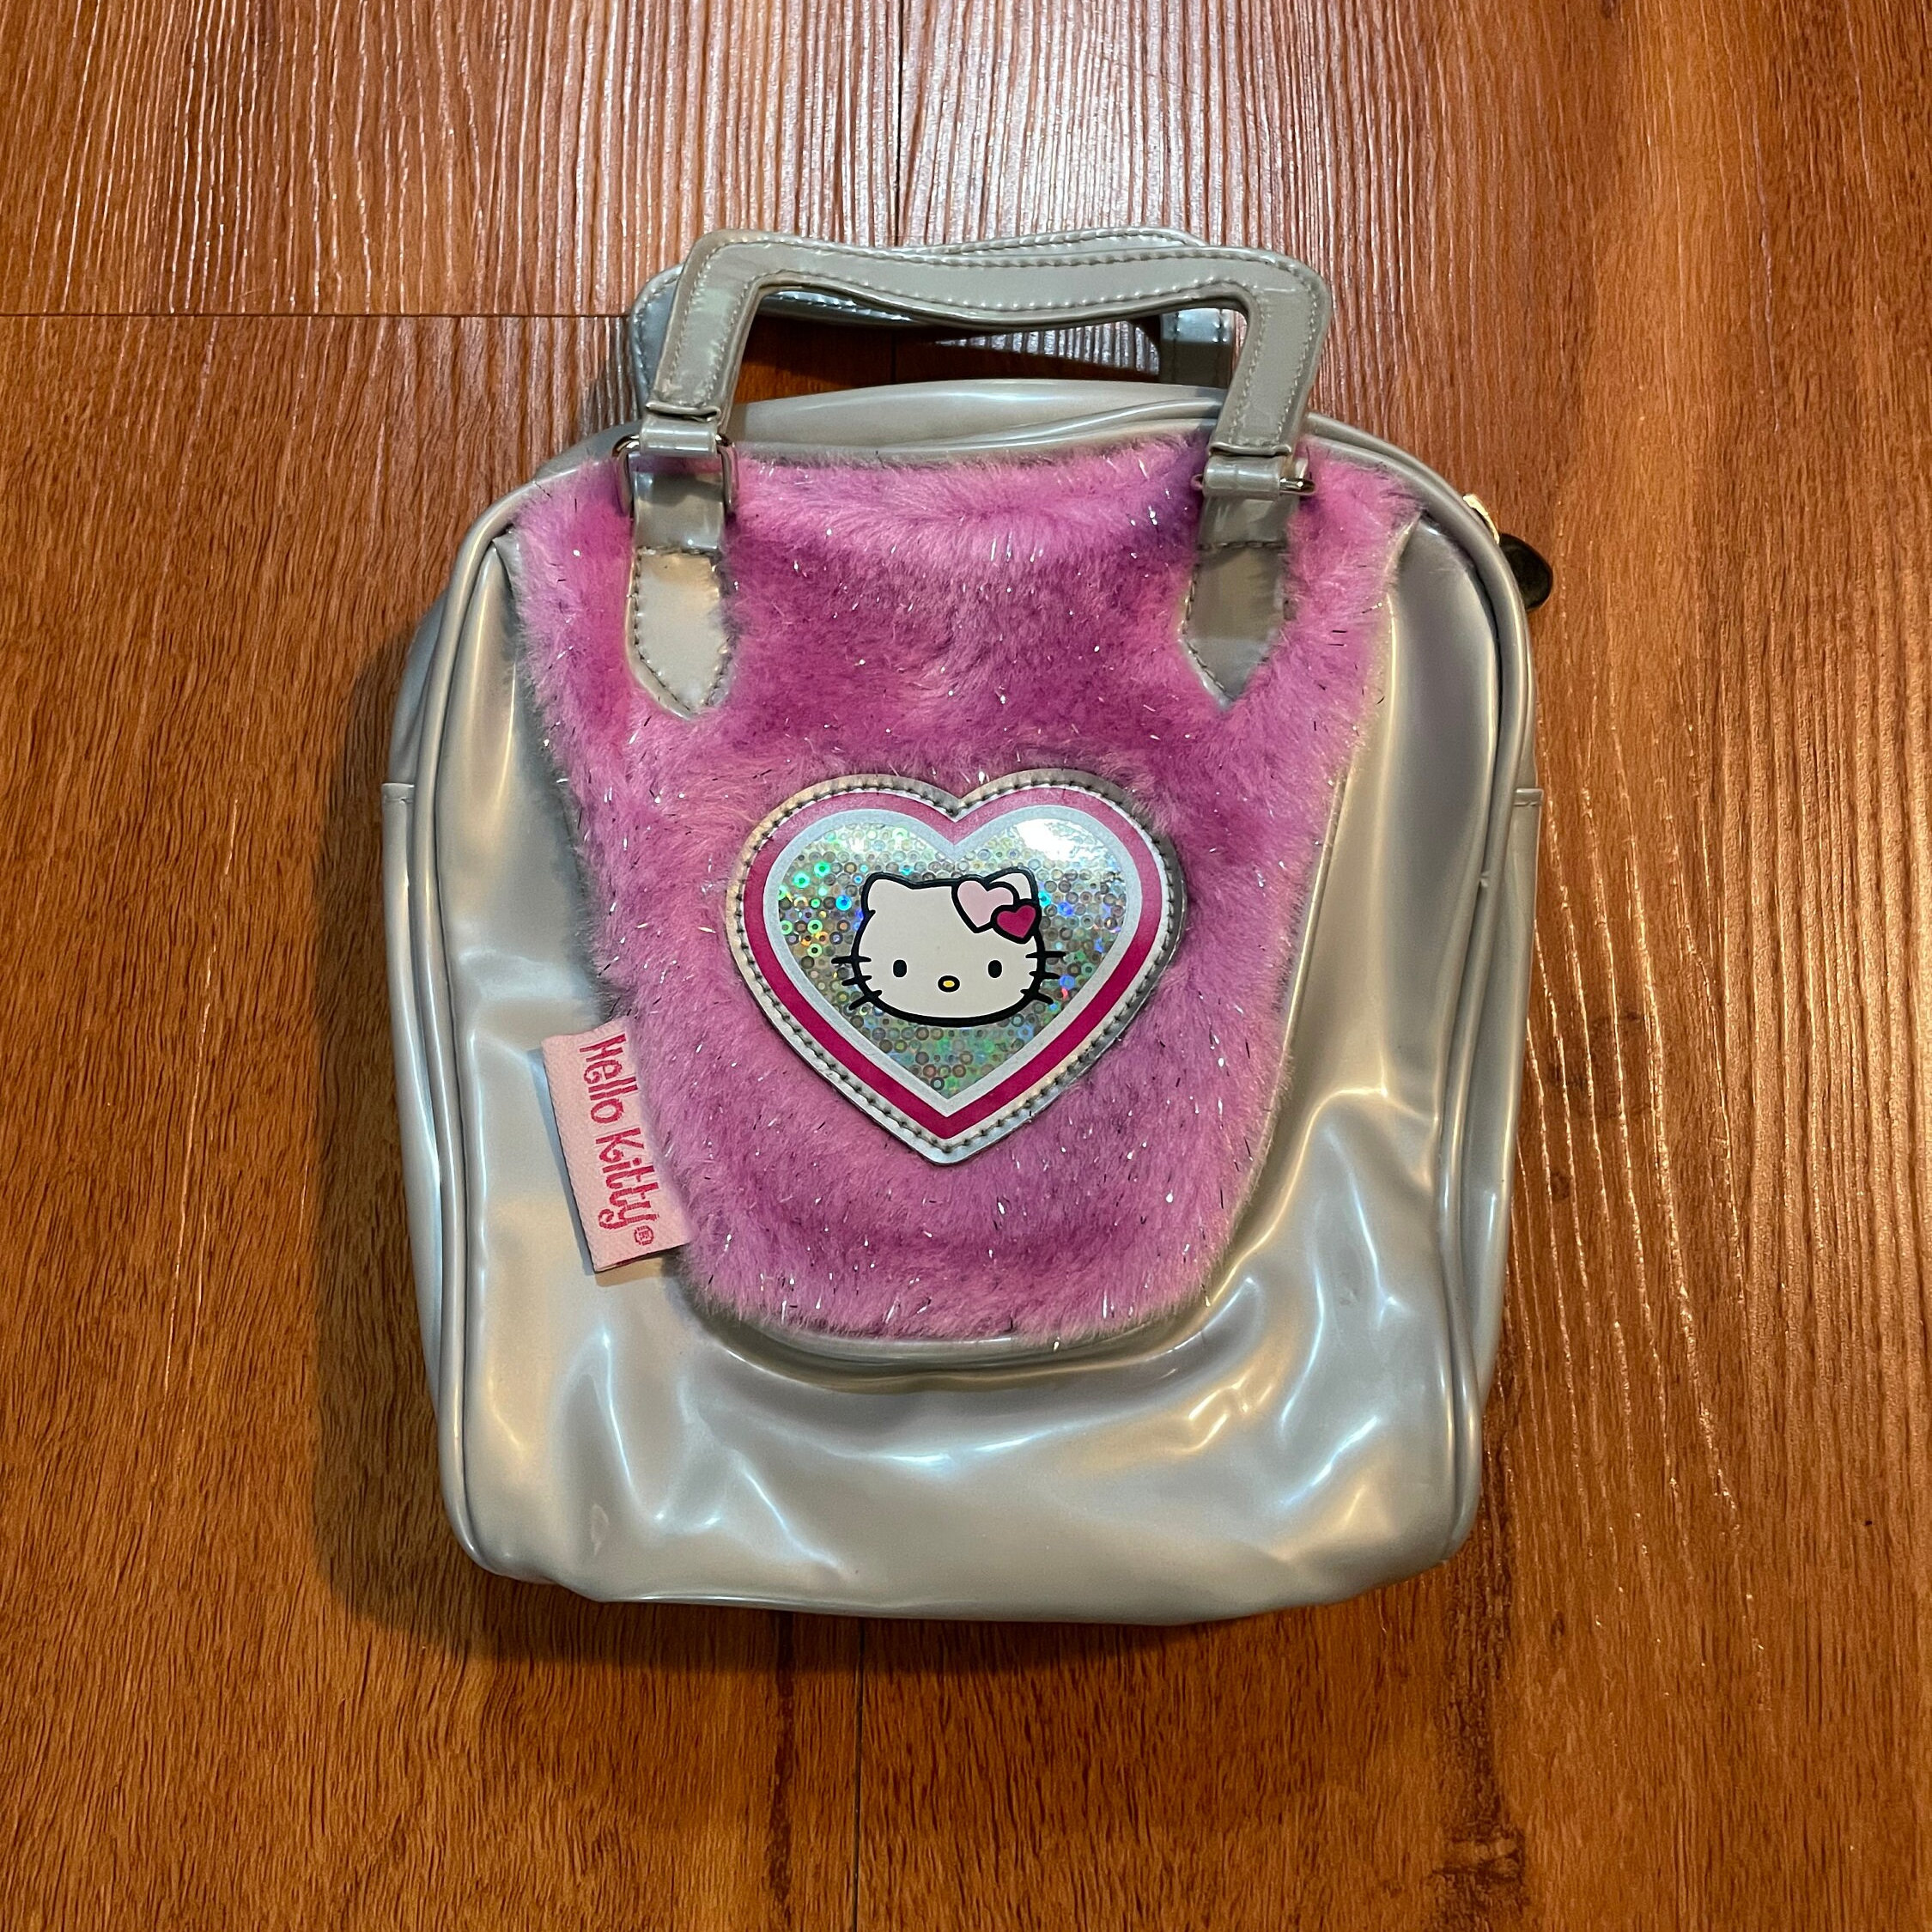 handbag hello kitty purse